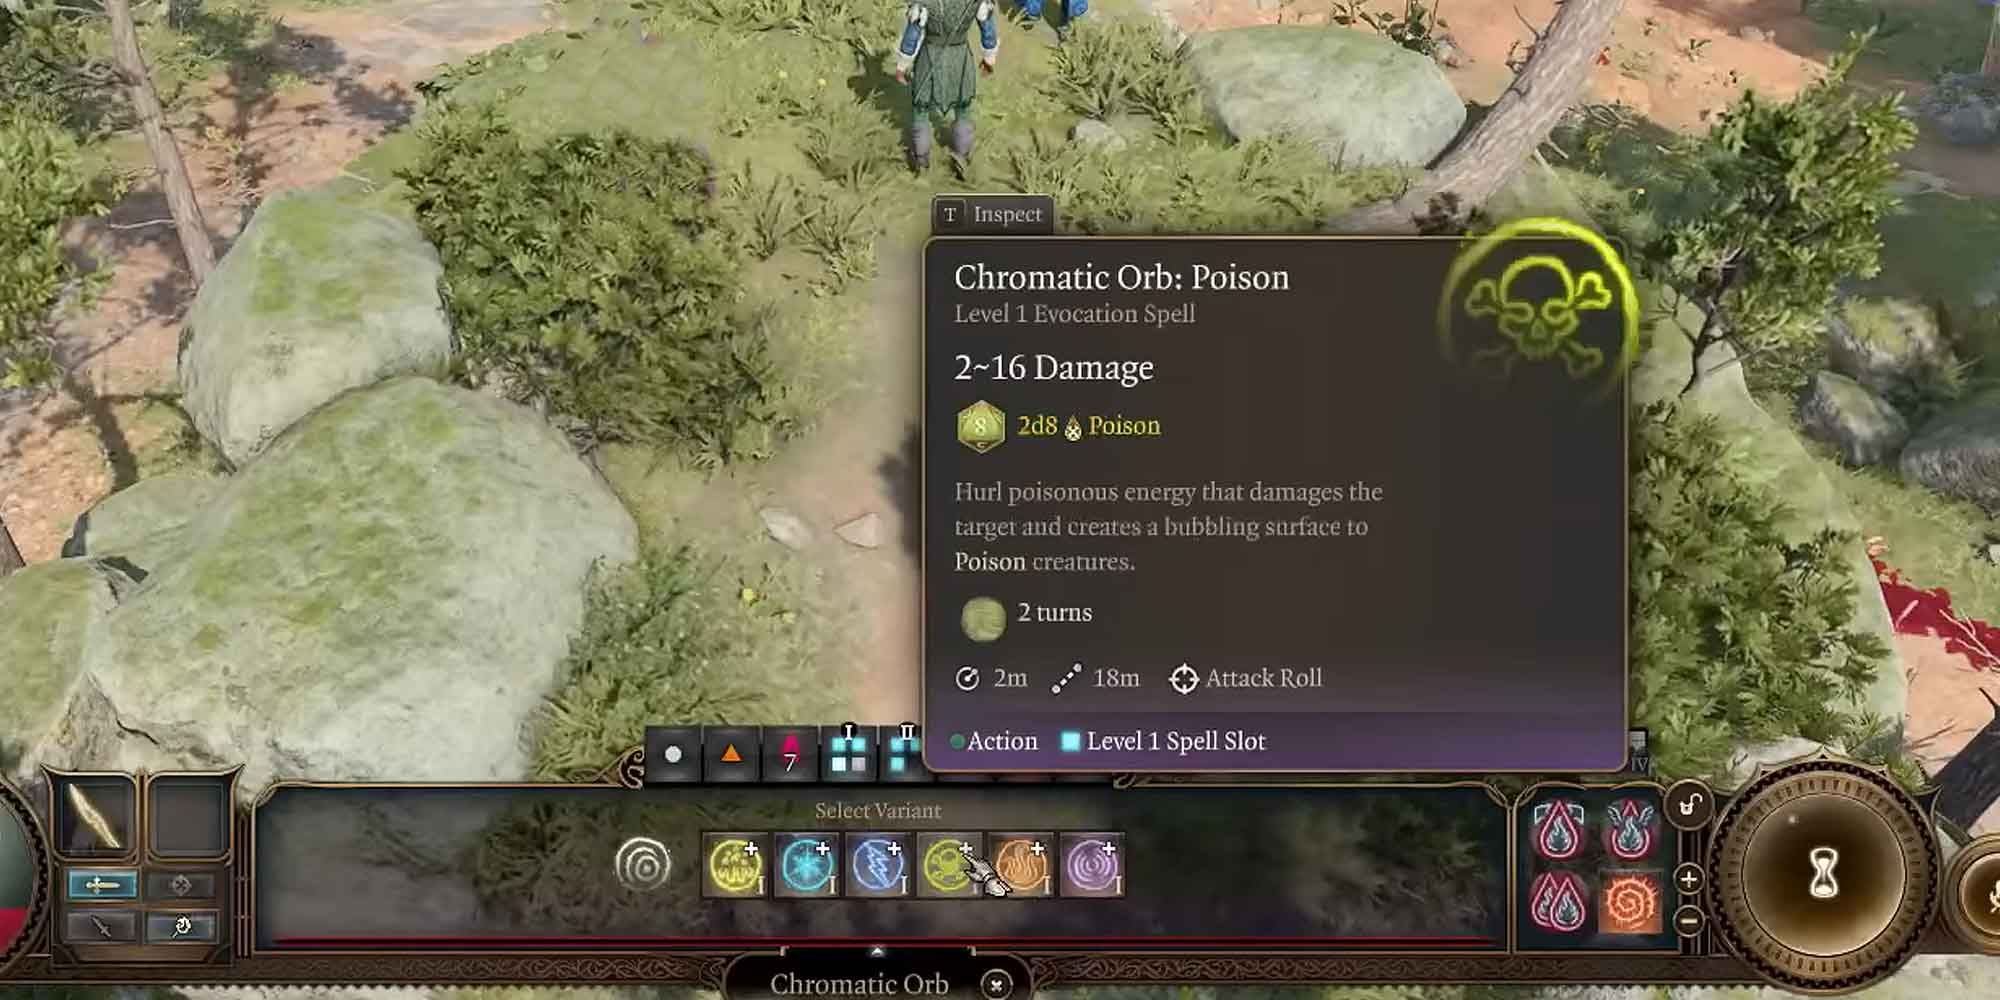 Using the Poison variant of Chromatic Orb s in Baldur's Gate 3